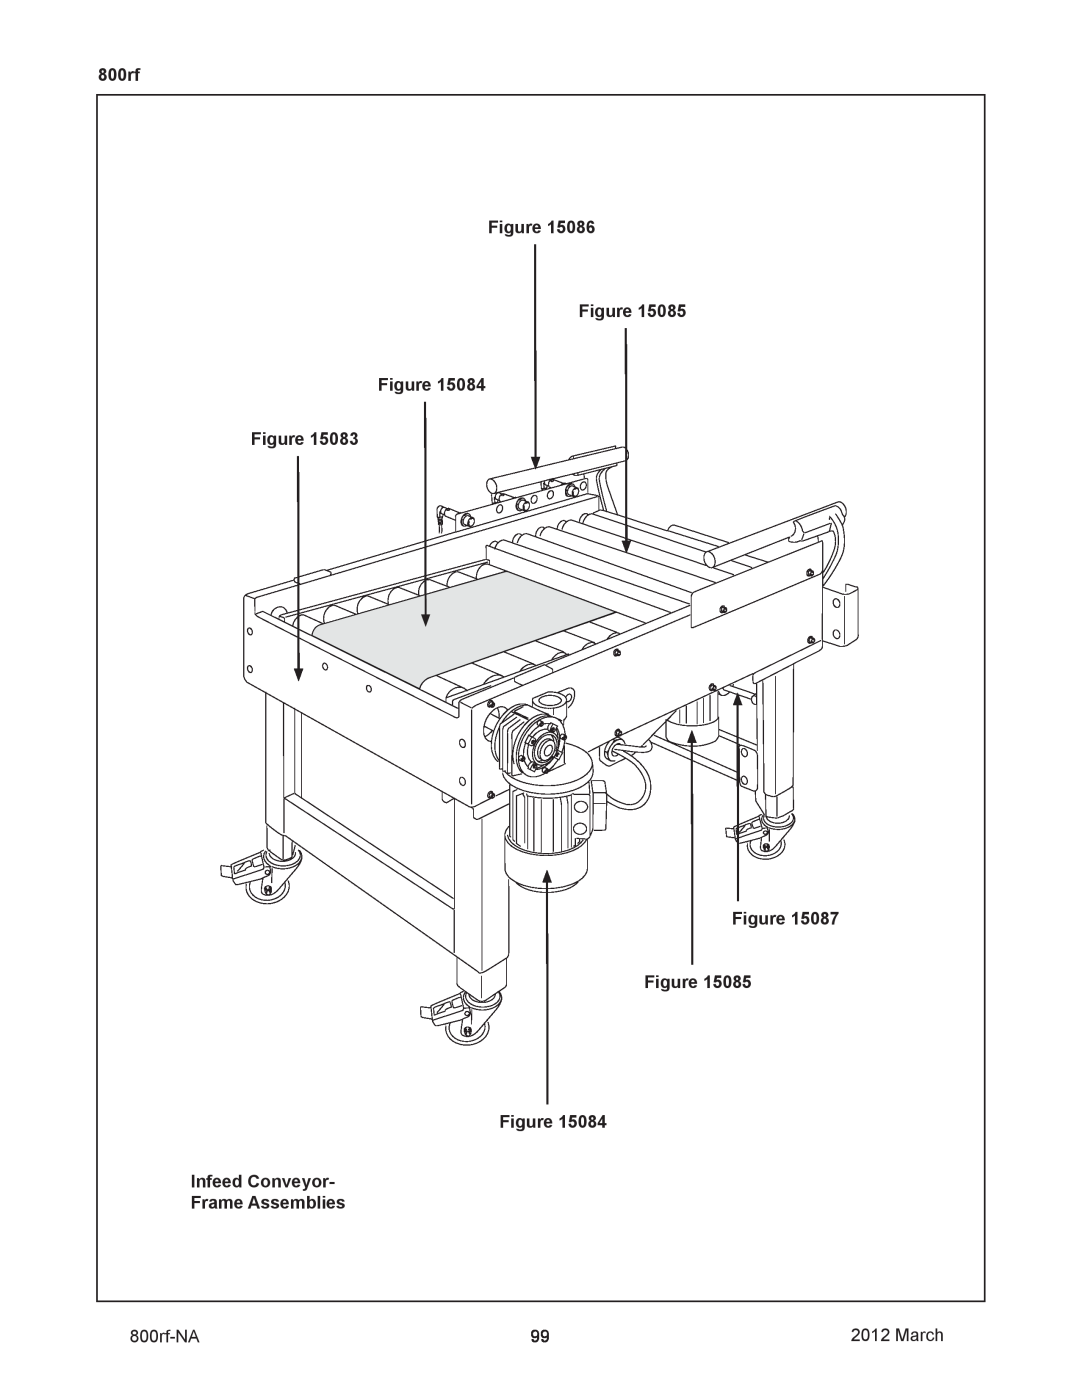 3M 40800 manual Infeed Conveyor Frame Assemblies, 800rf-NA, March 